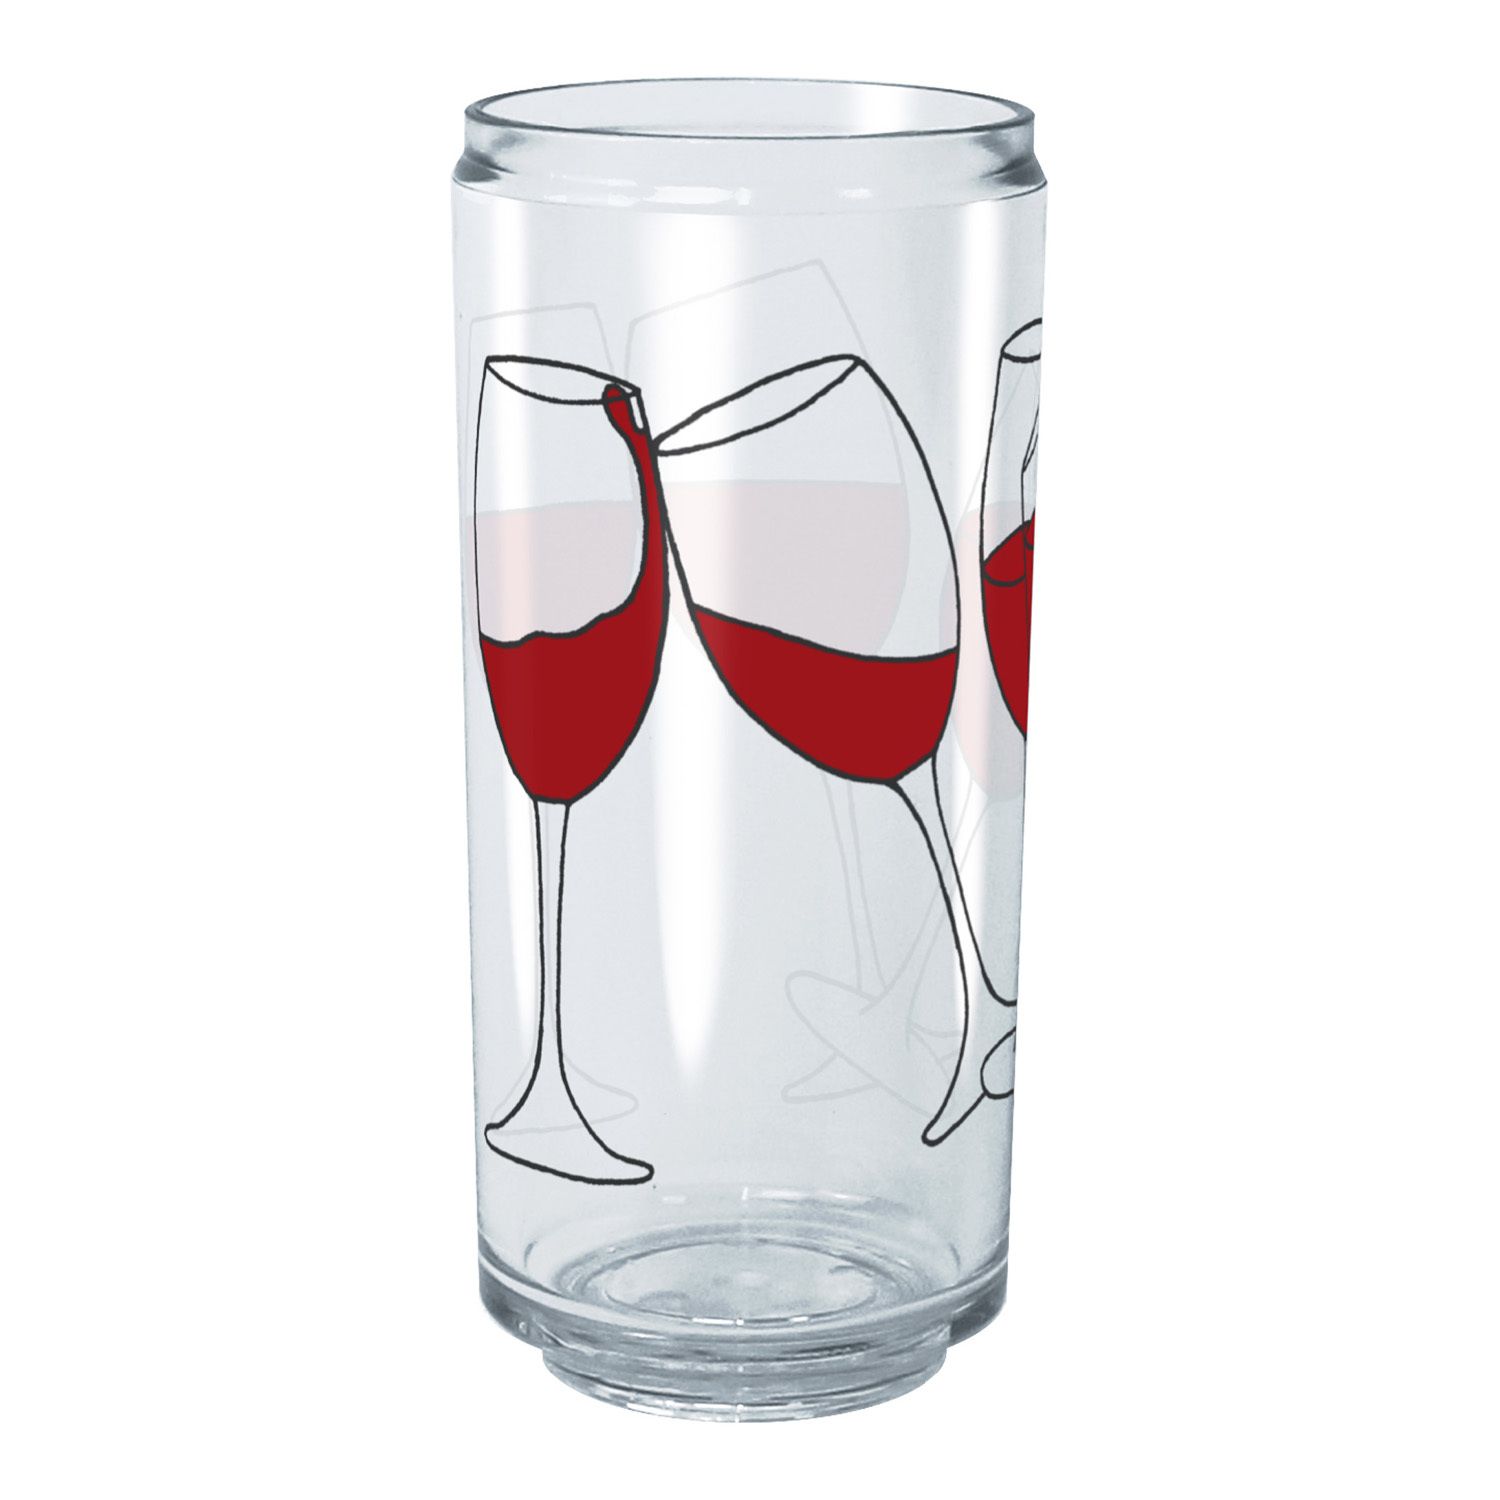 Juvale Stemmed Wine Glasses Set of 4 for Housewarming, Anniversary, Wedding (4.5 oz)